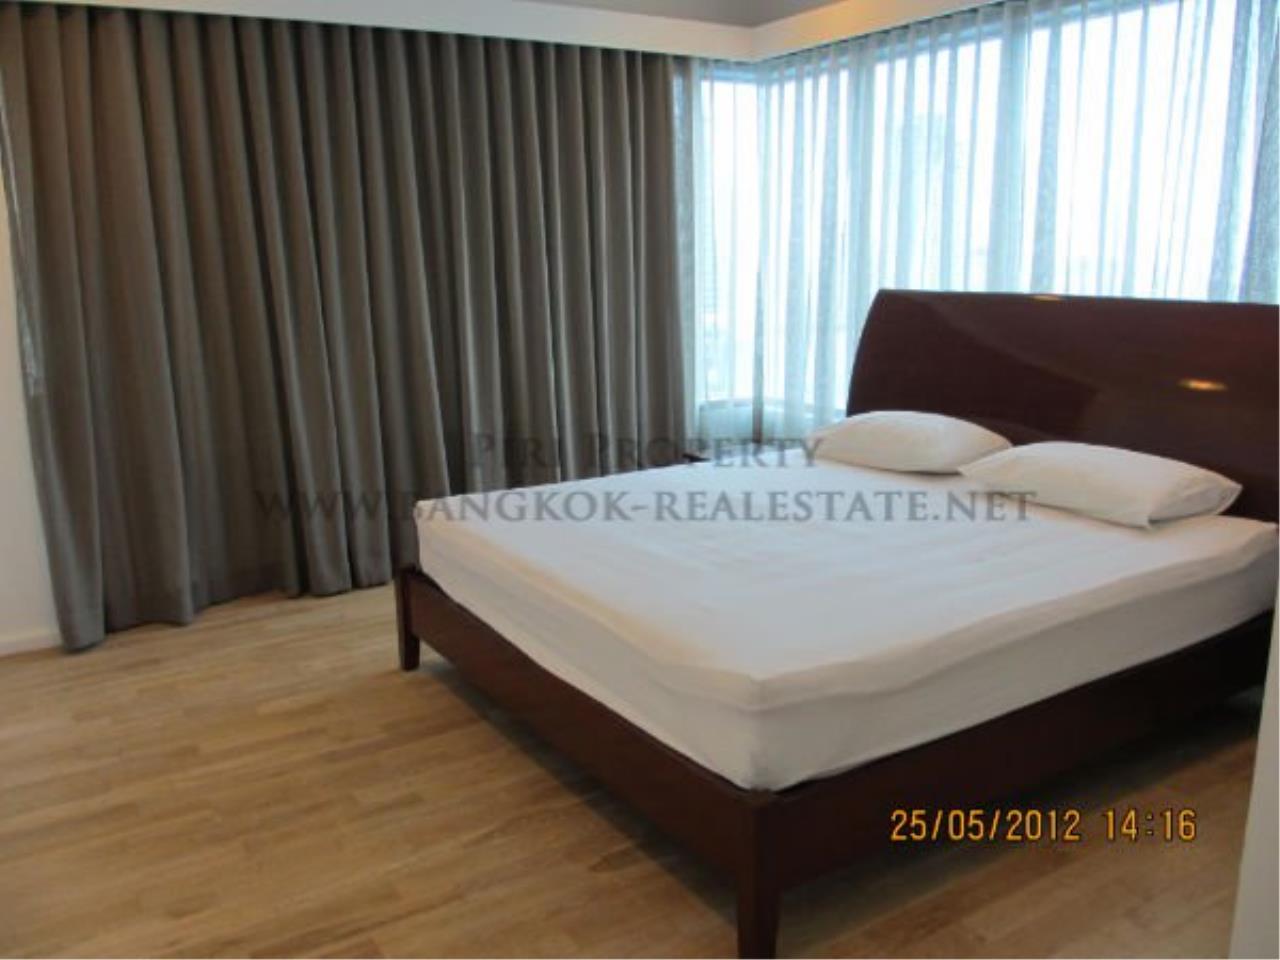 Piri Property Agency's Royal Maneeya Residences - Living the Renaissance Hotel Lifestyle - 2 Bedroom 4